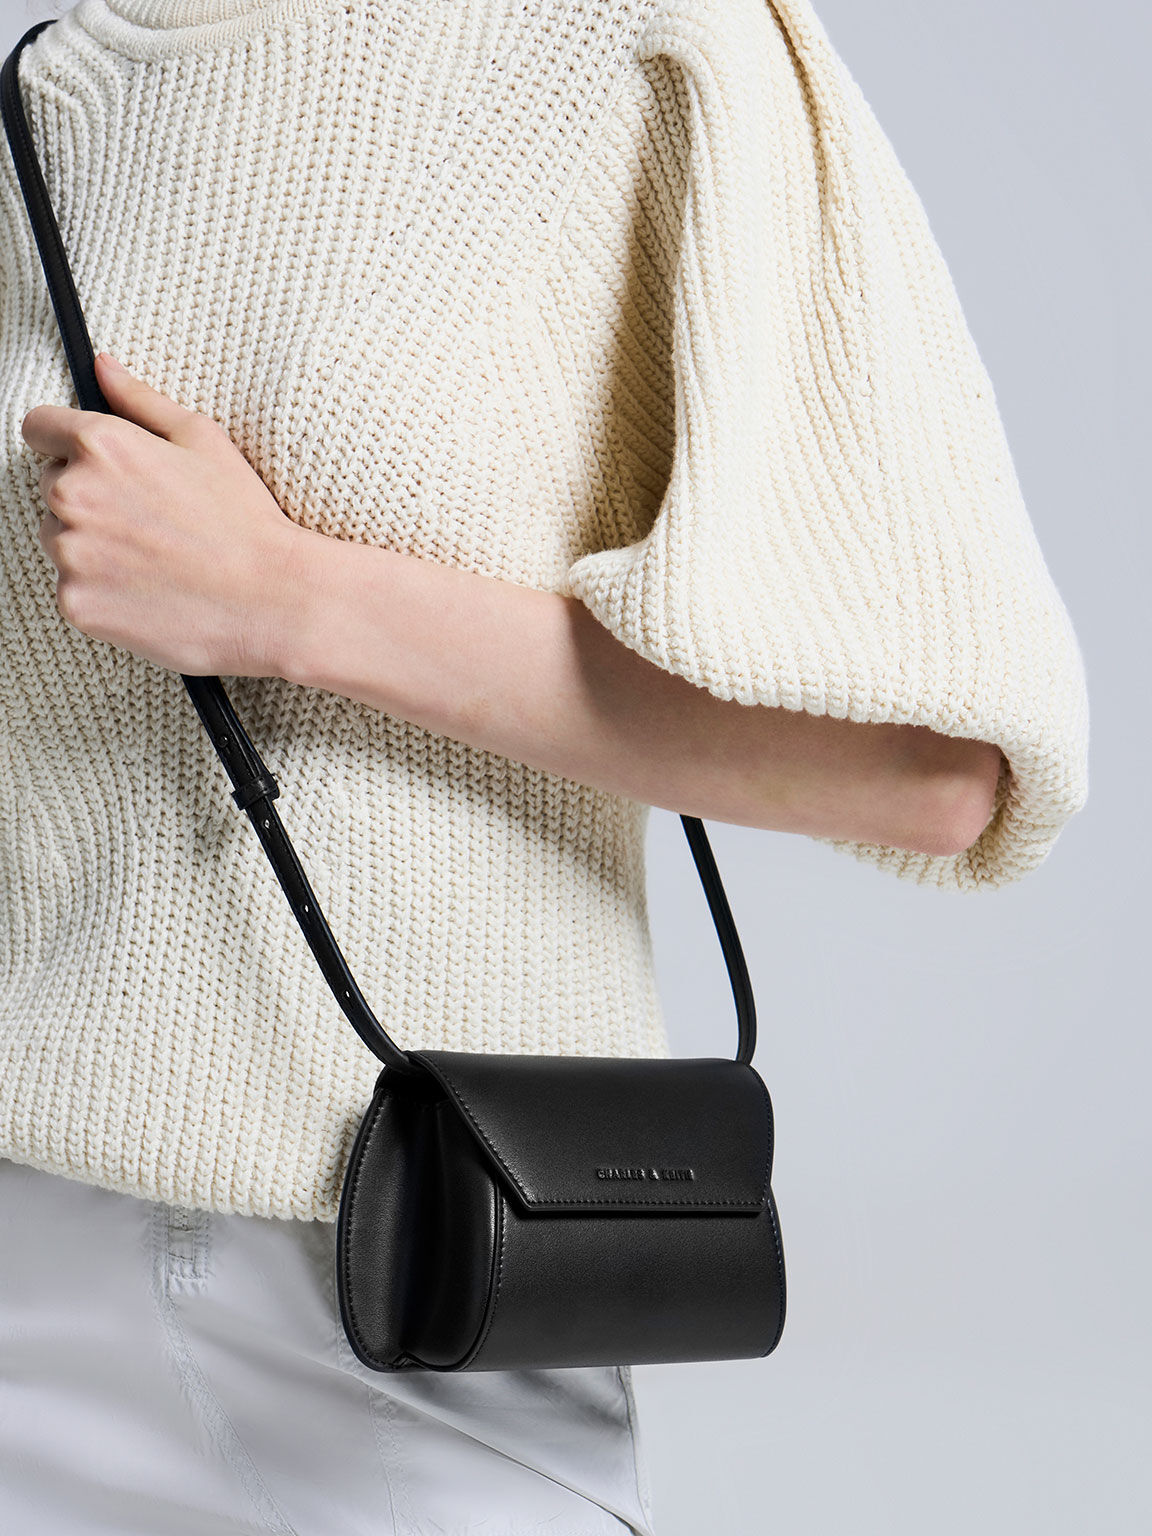 The Crocheted Denim Flap Bag – Designs That Donate